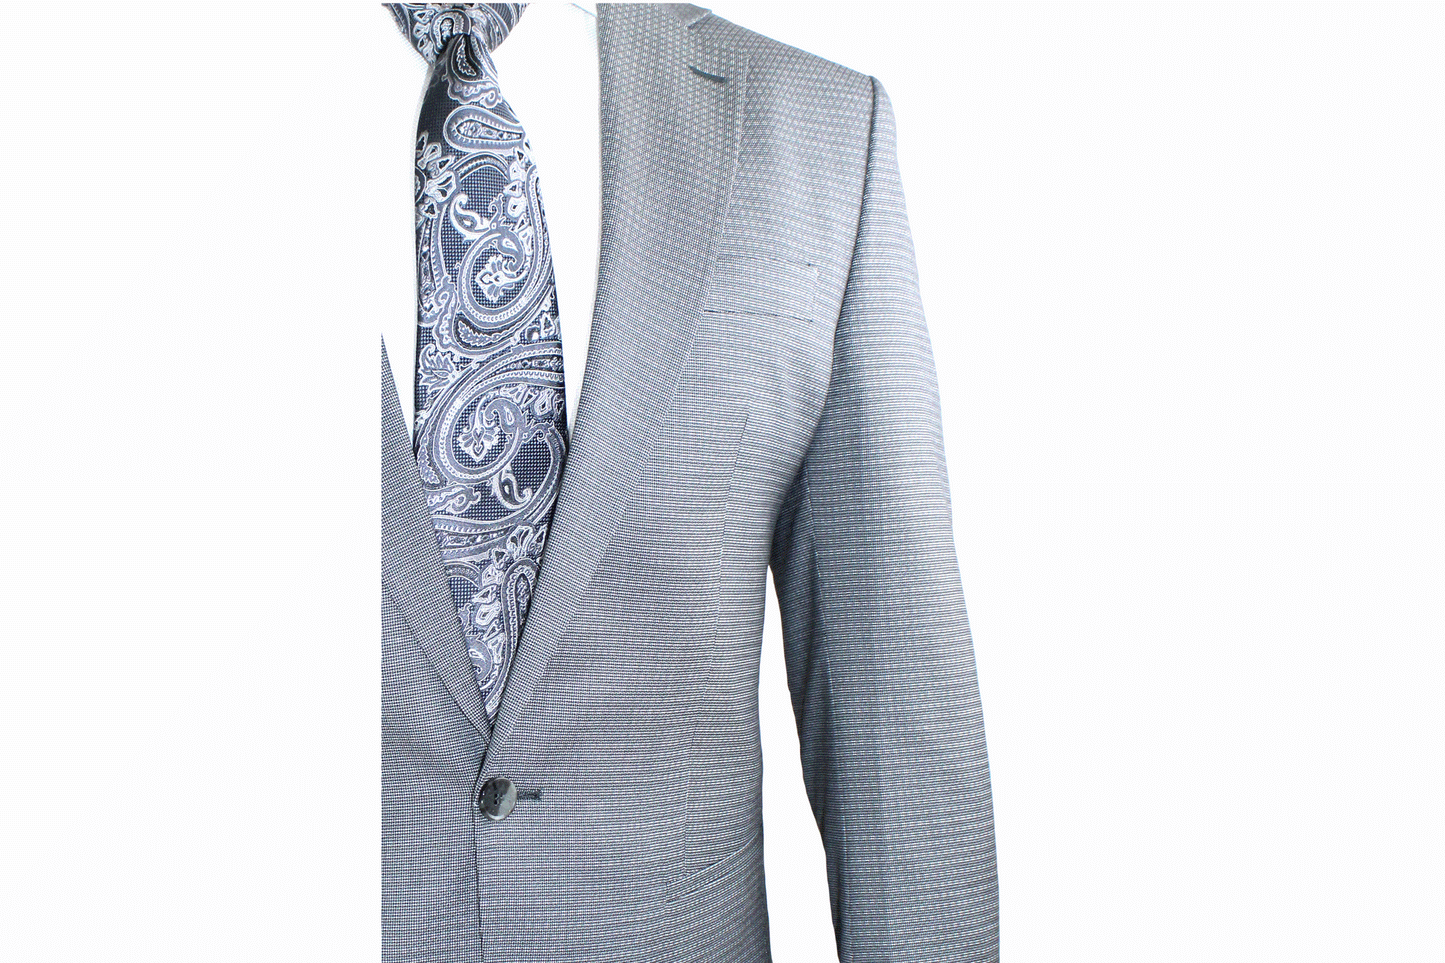 Polermo Light Grey Suit